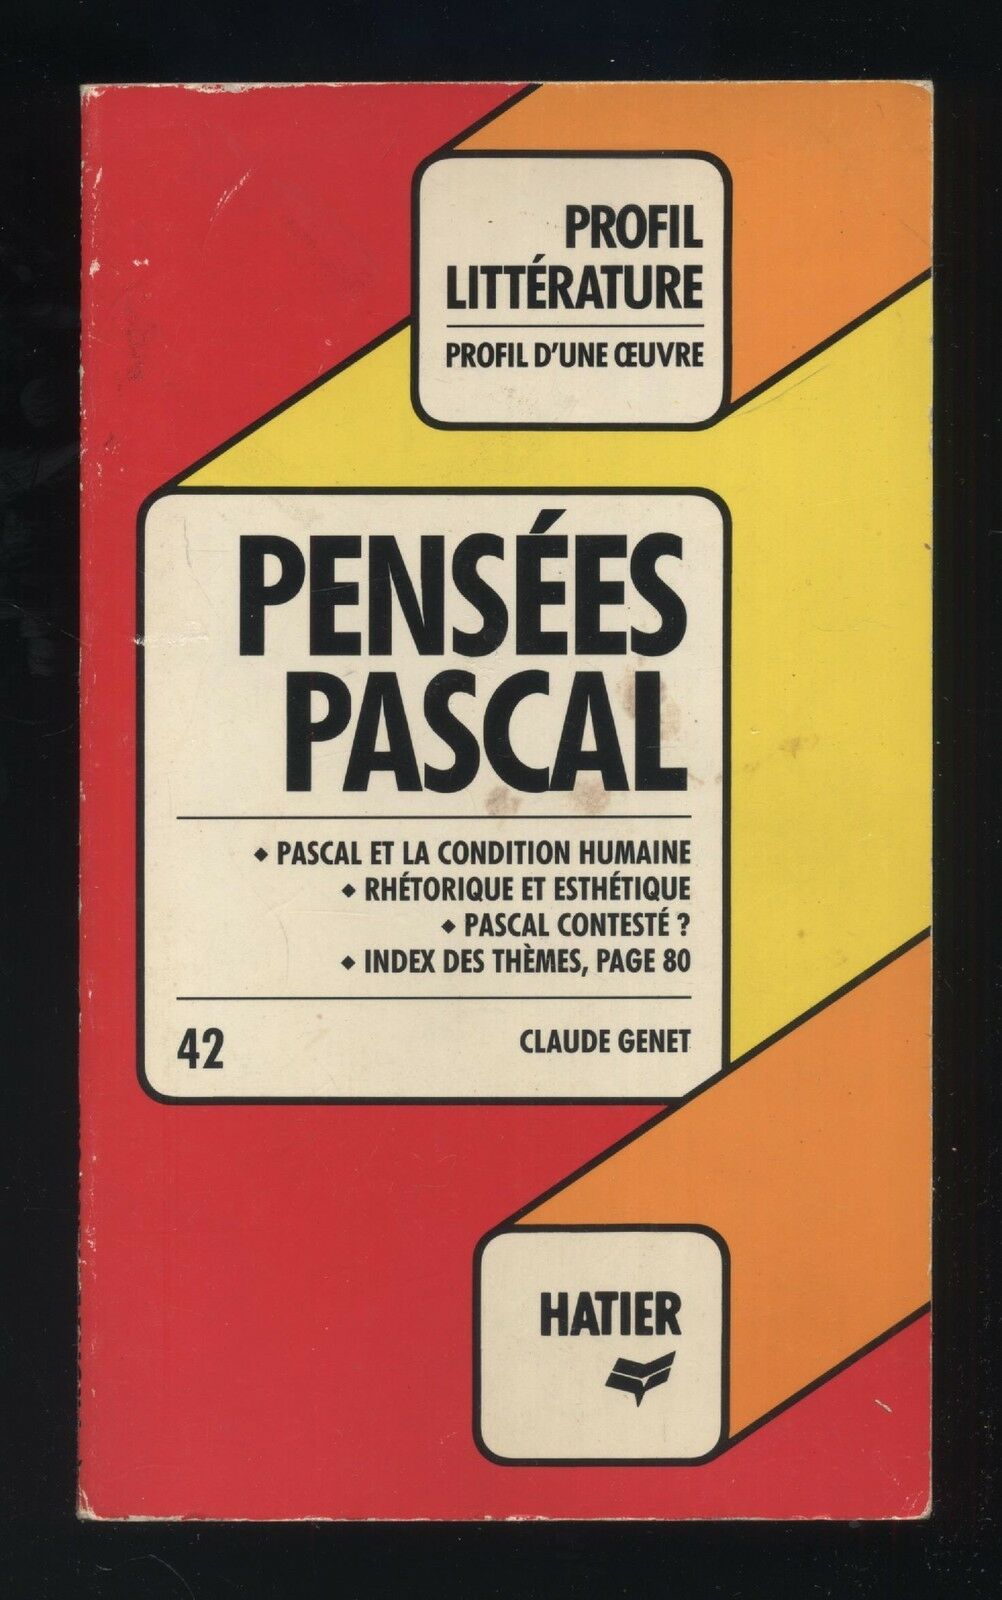 PENSEES PASCAL di Claude Genet ed. 1973 Hatier